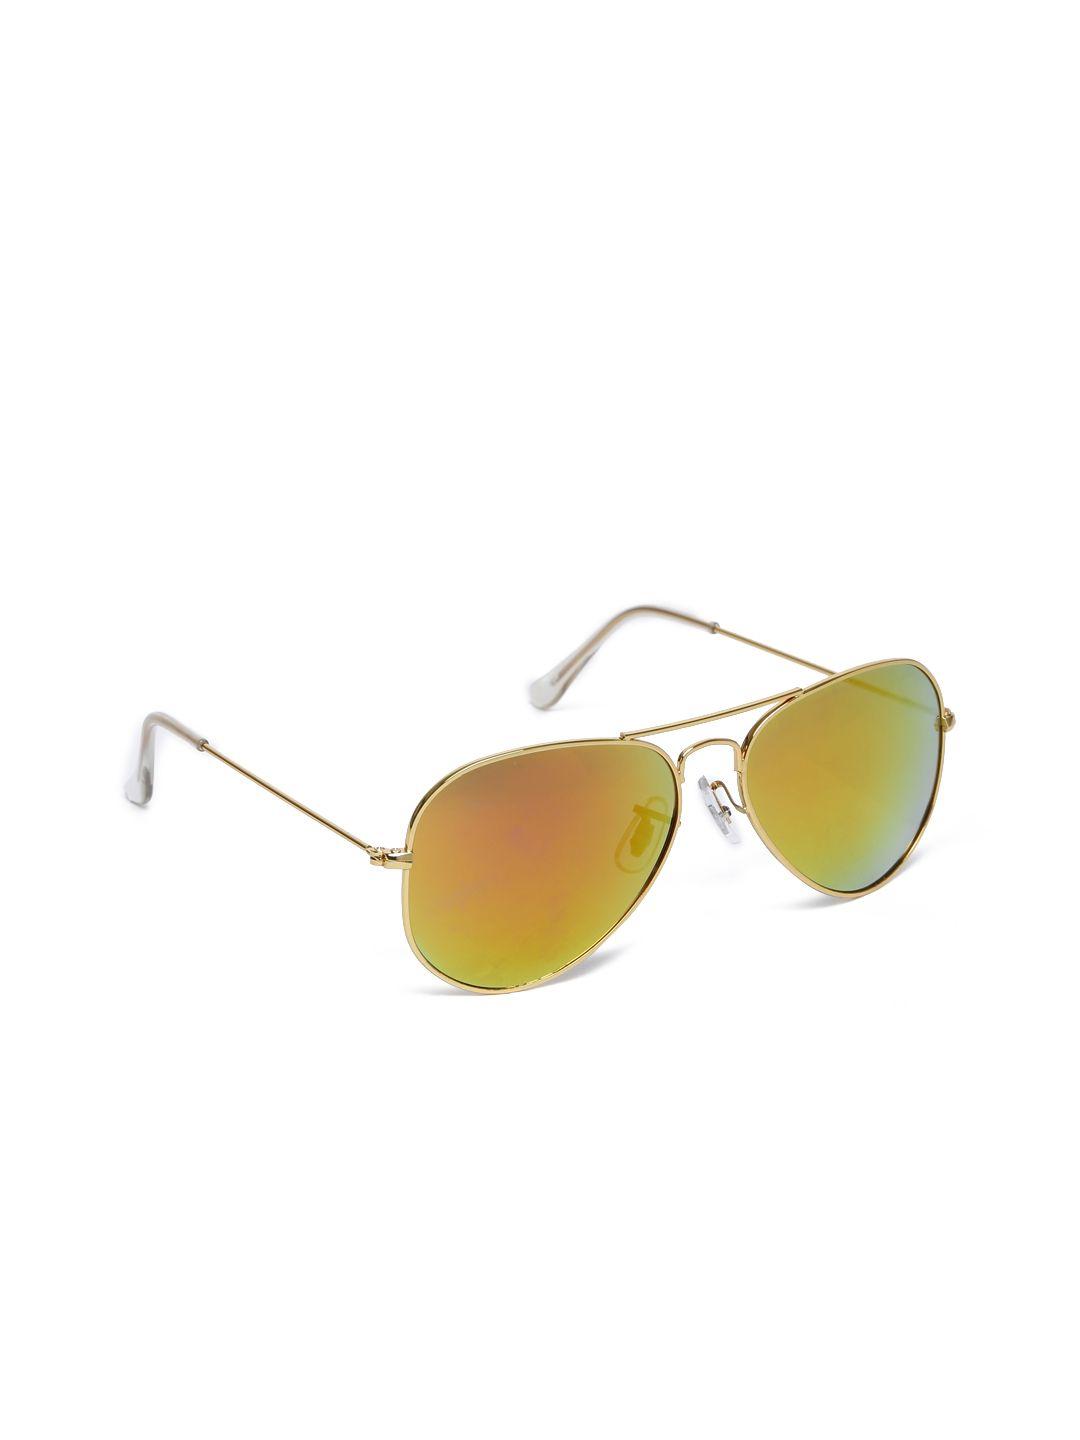 roadster unisex aviator sunglasses